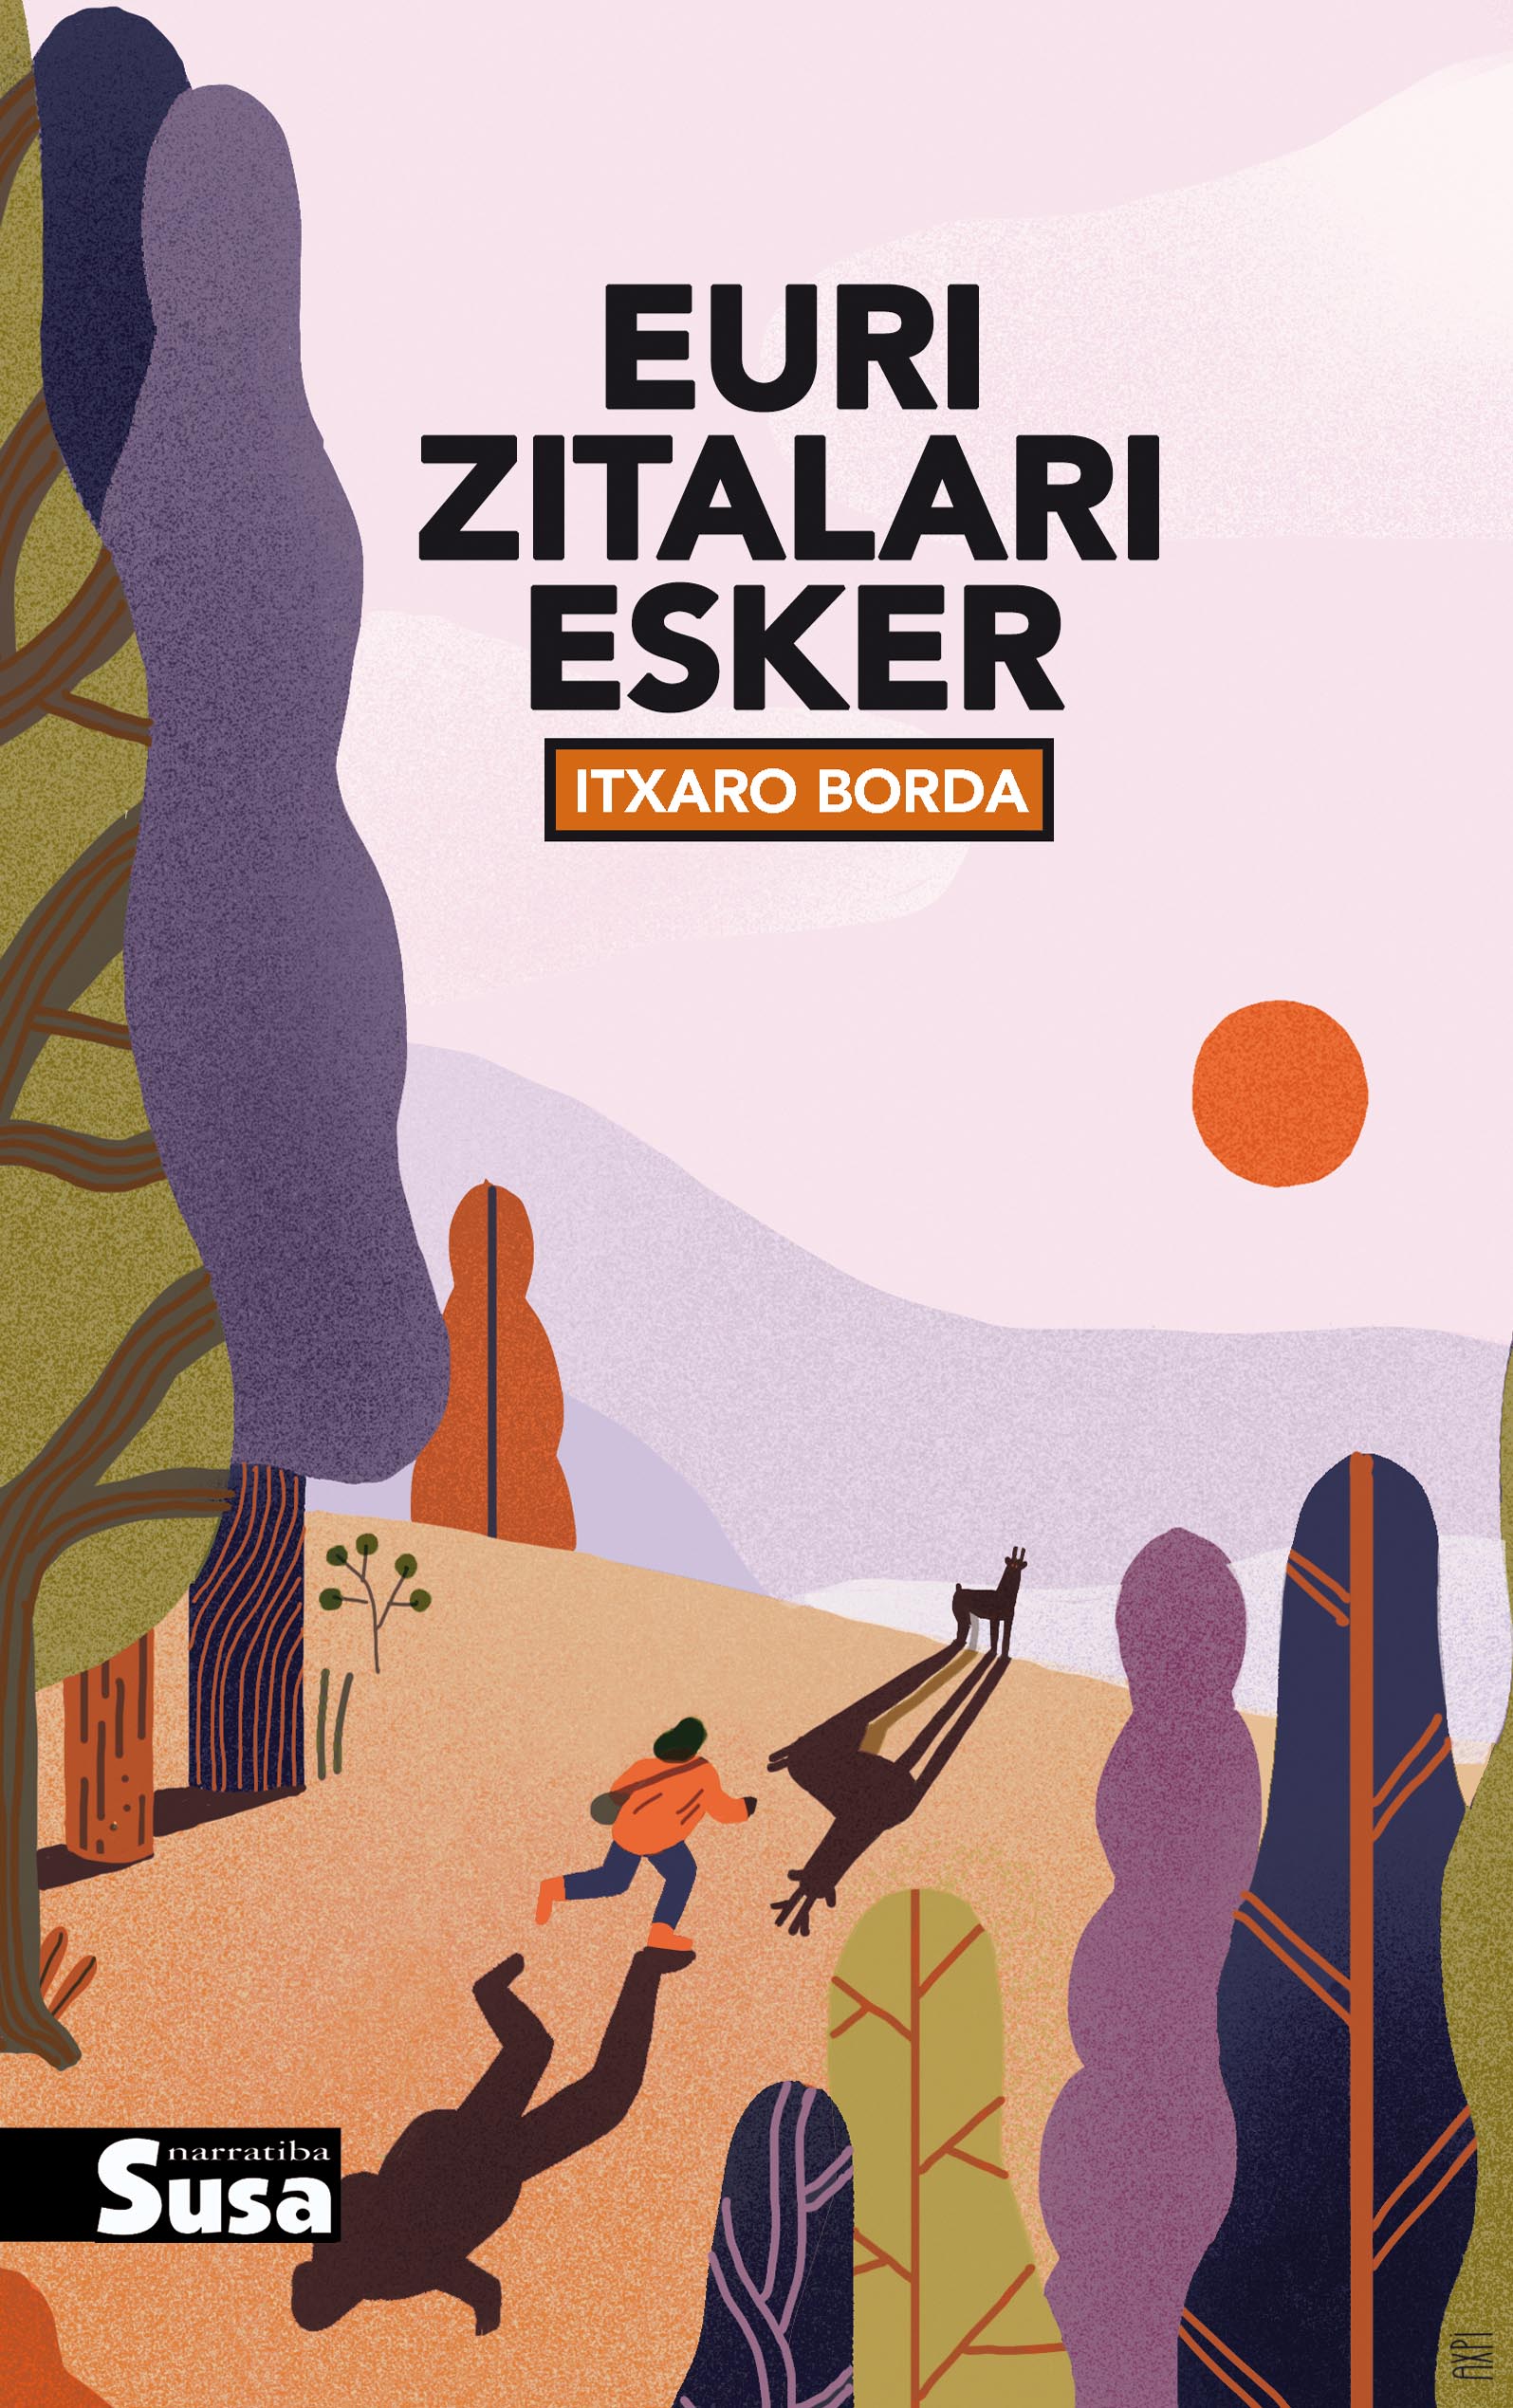 Euri zitalari esker (Paperback, Euskara language, Susa)